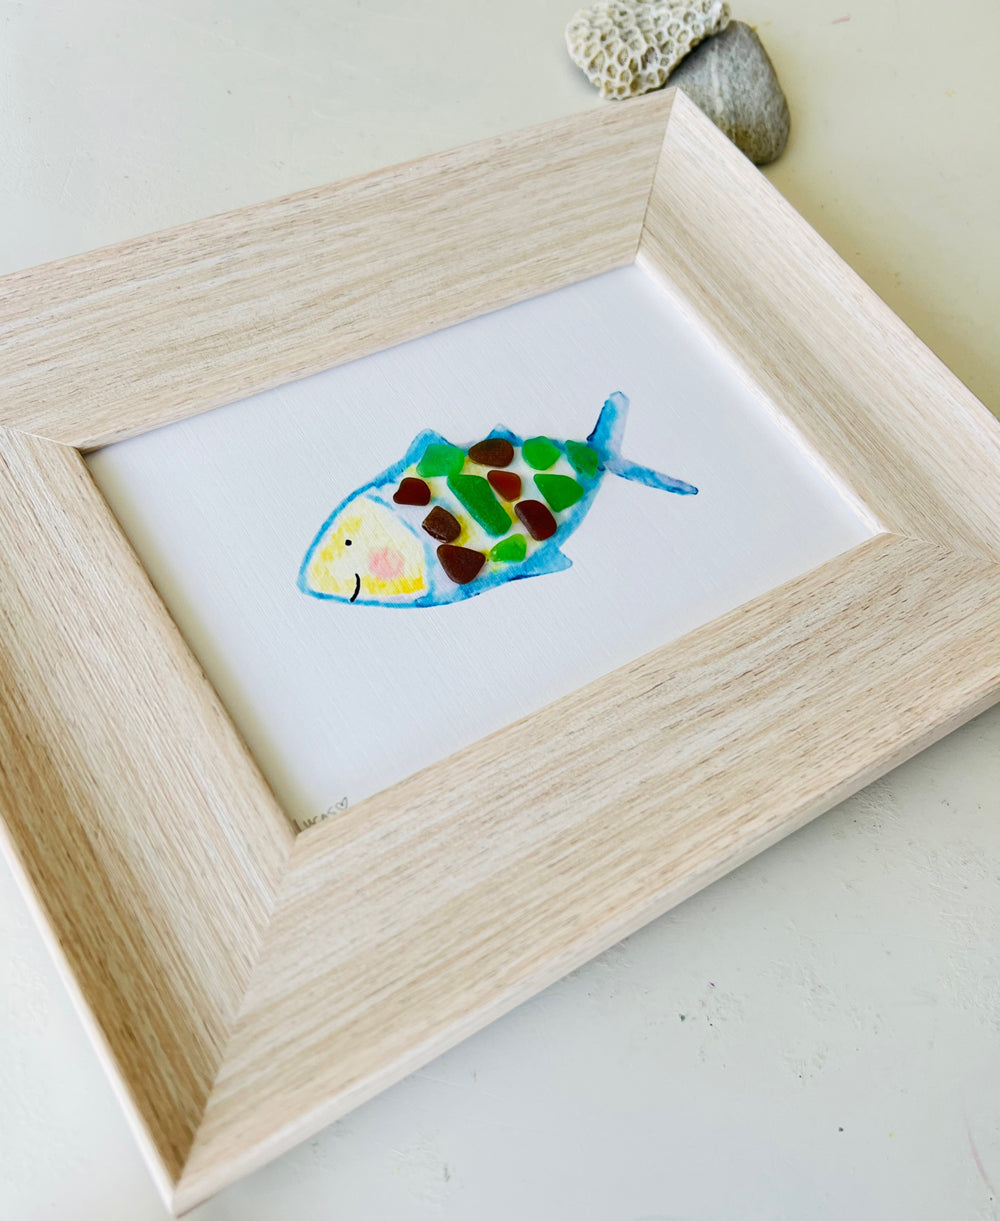 Mosiac Fish Sea Glass Art by Sook and Hook